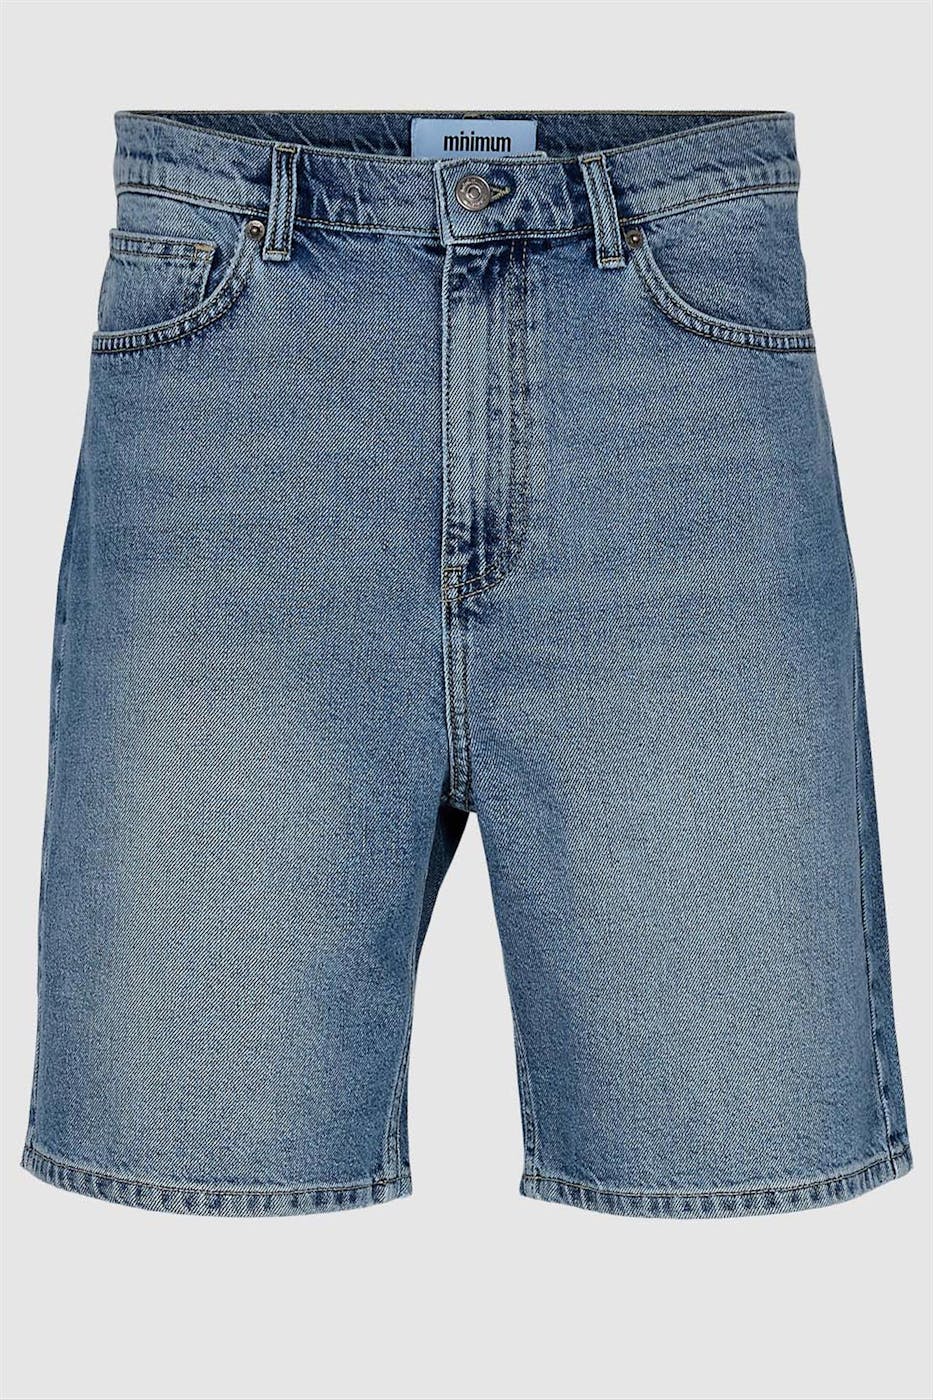 Minimum - Blauwe Beans jeansshort